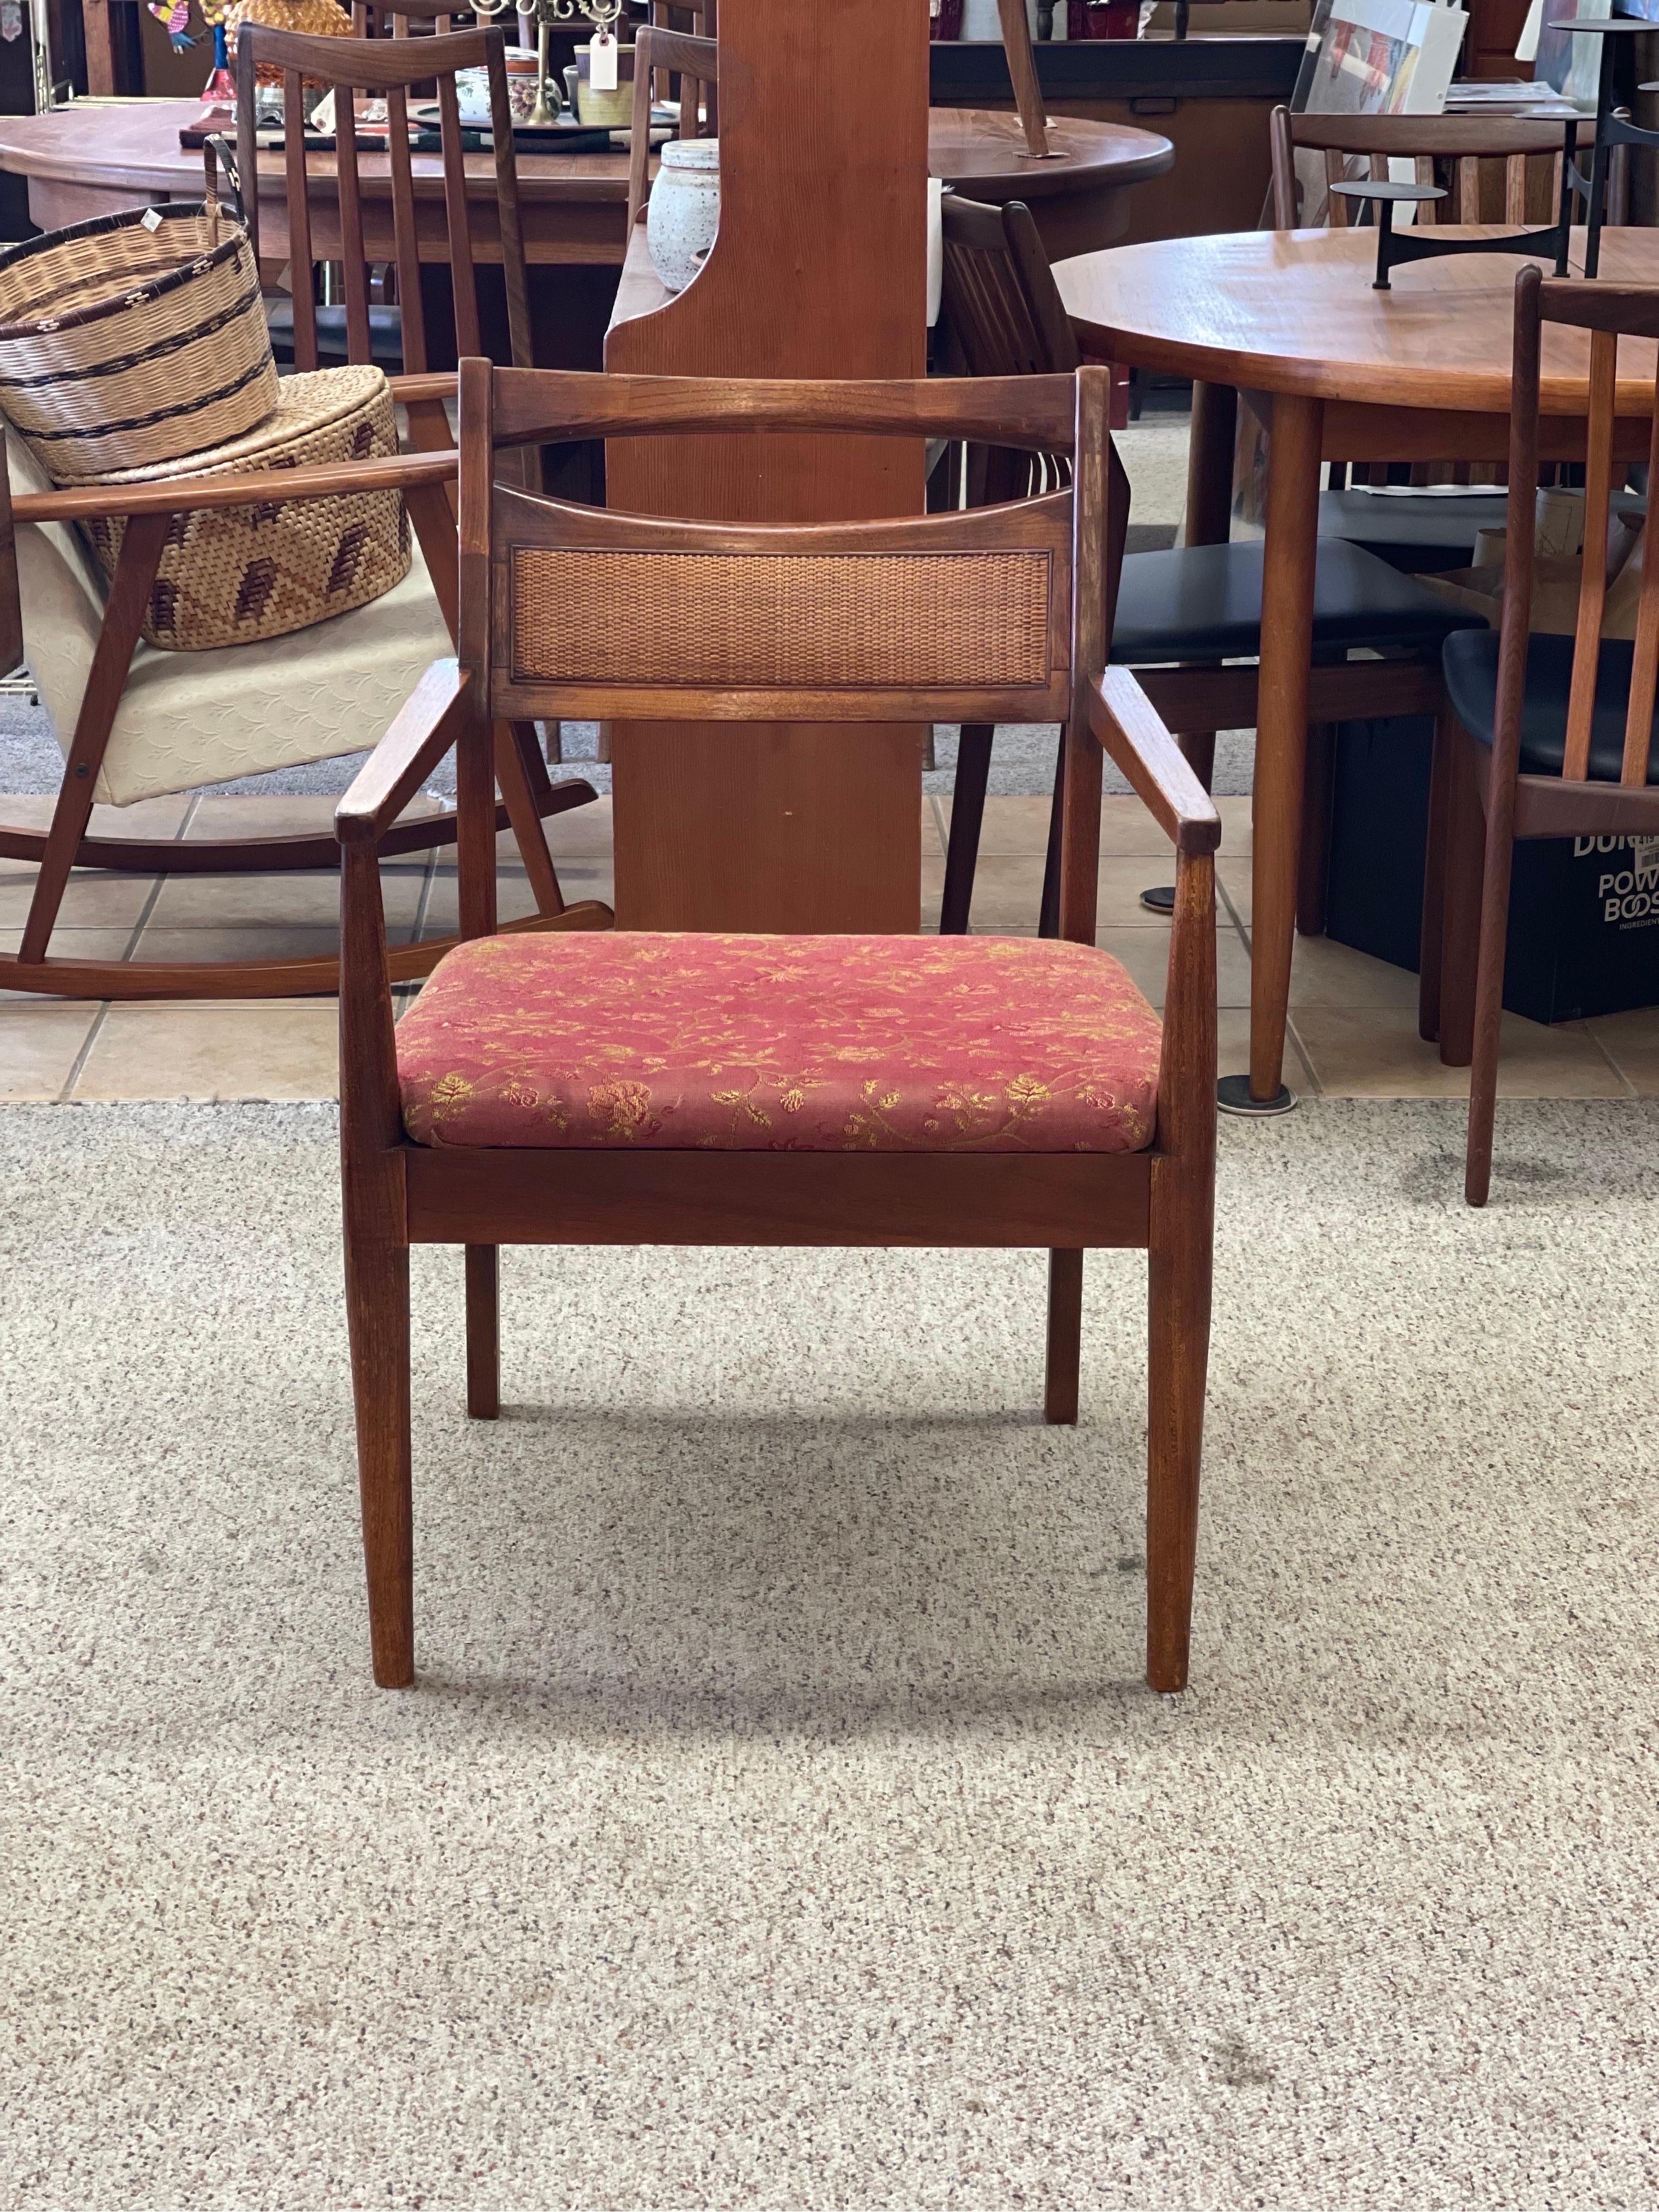 Vintage Mid-Centuryr Modern Chair

Dimensions. 22 1/2 W ; 23 1/2 D ; 32 H

Seat Height. 18.